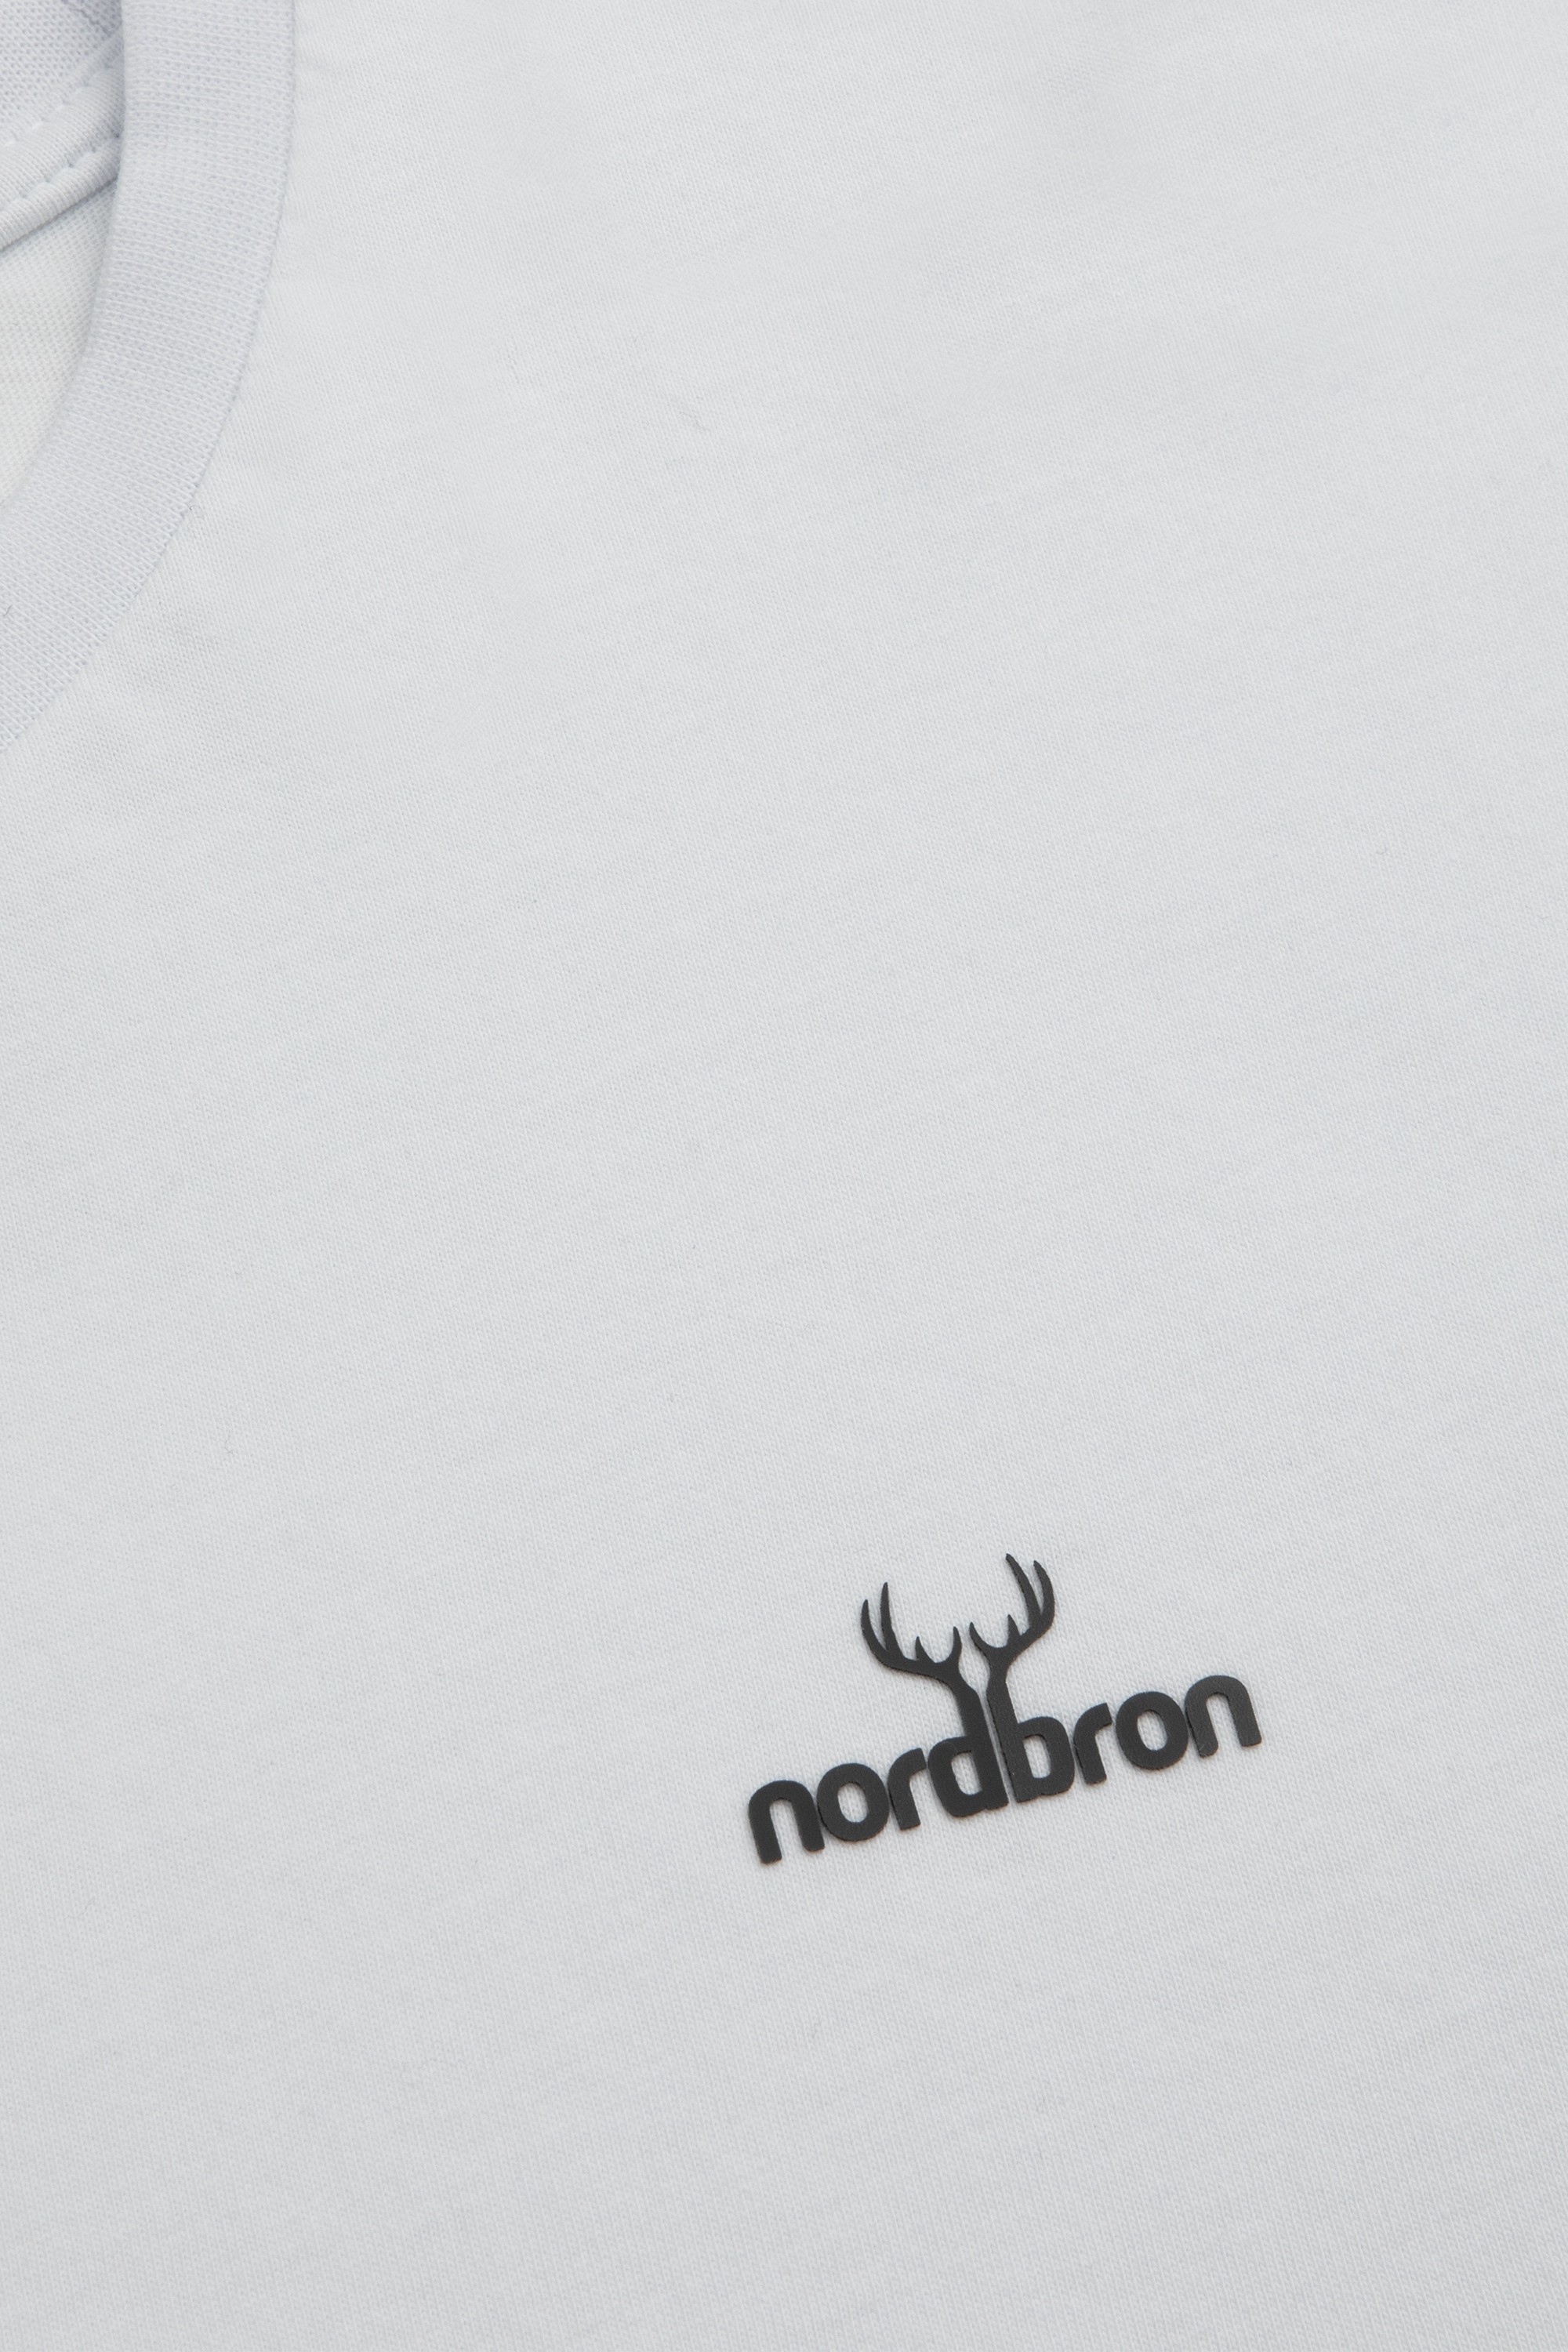 Kramer Nordbron Oversize T-shirt